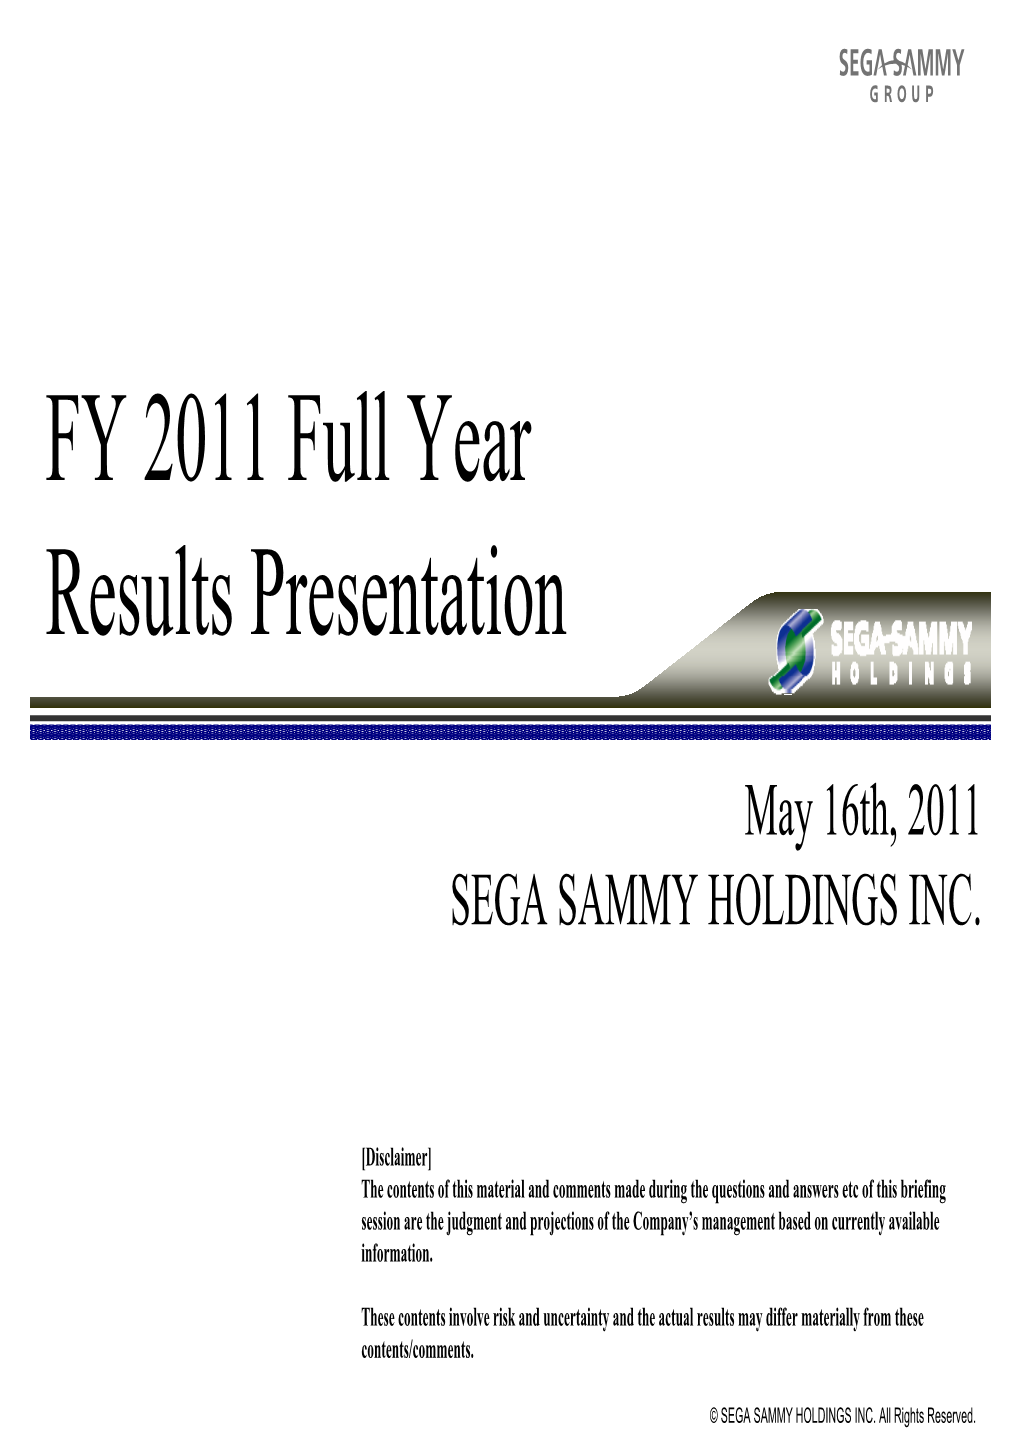 FY 2011 Full Year Results Presentation